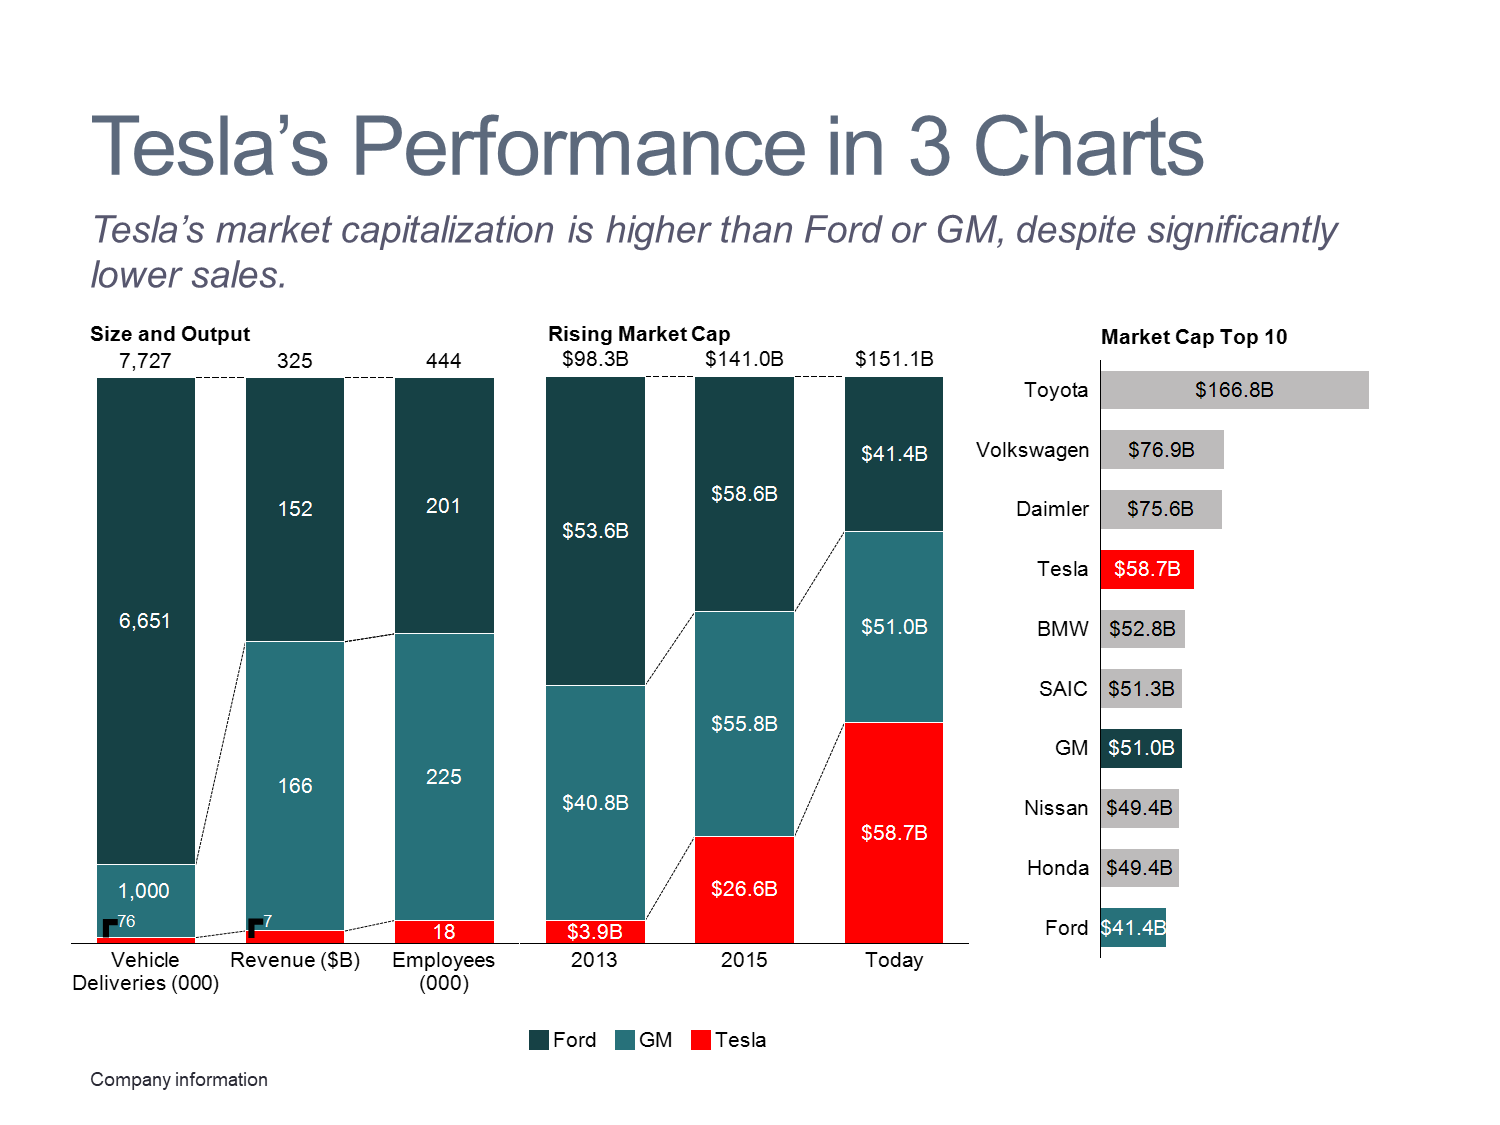 Tesla's Performance in 3 Bar Charts